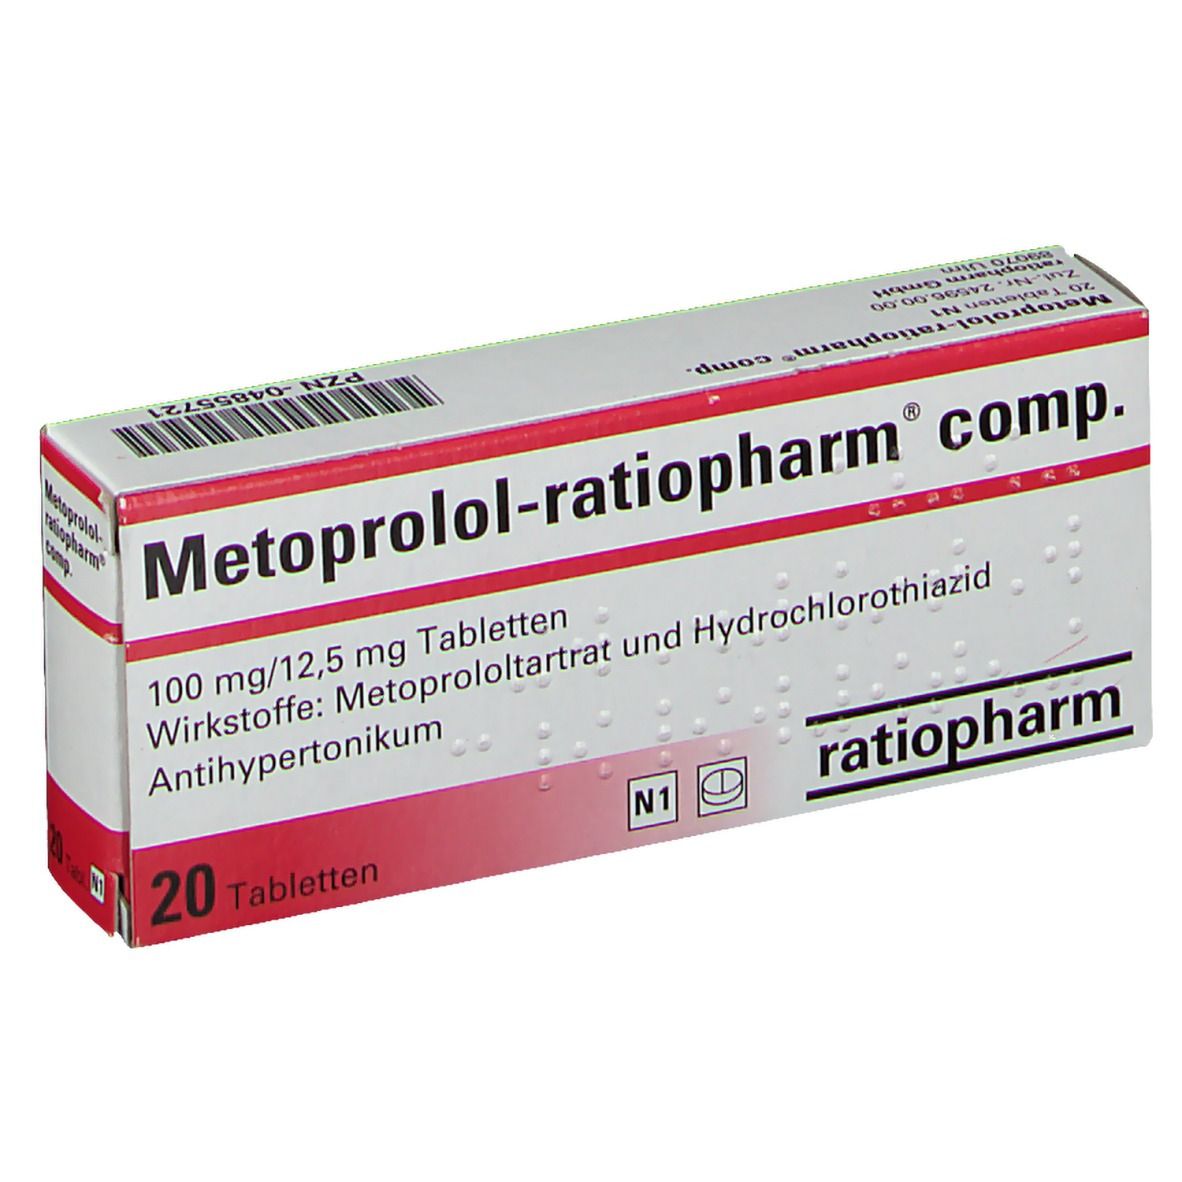 Metoprolol-ratiopharm® comp.